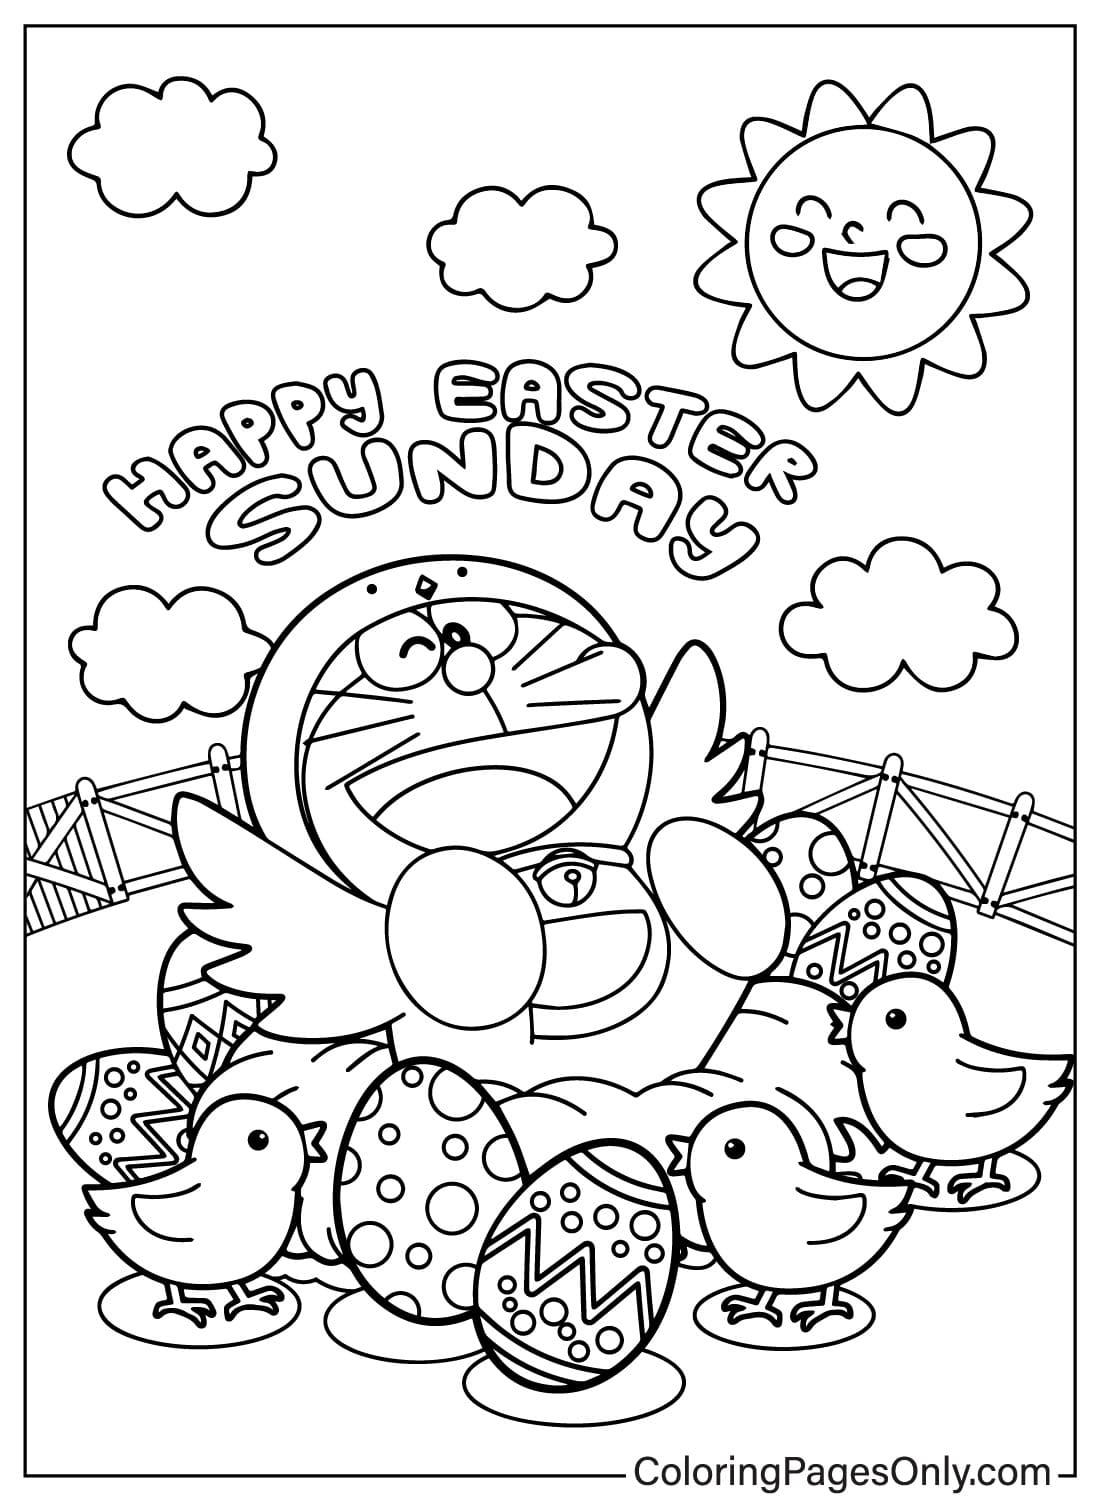 Página para colorear de Doraemon de Pascua de dibujos animados de Pascua